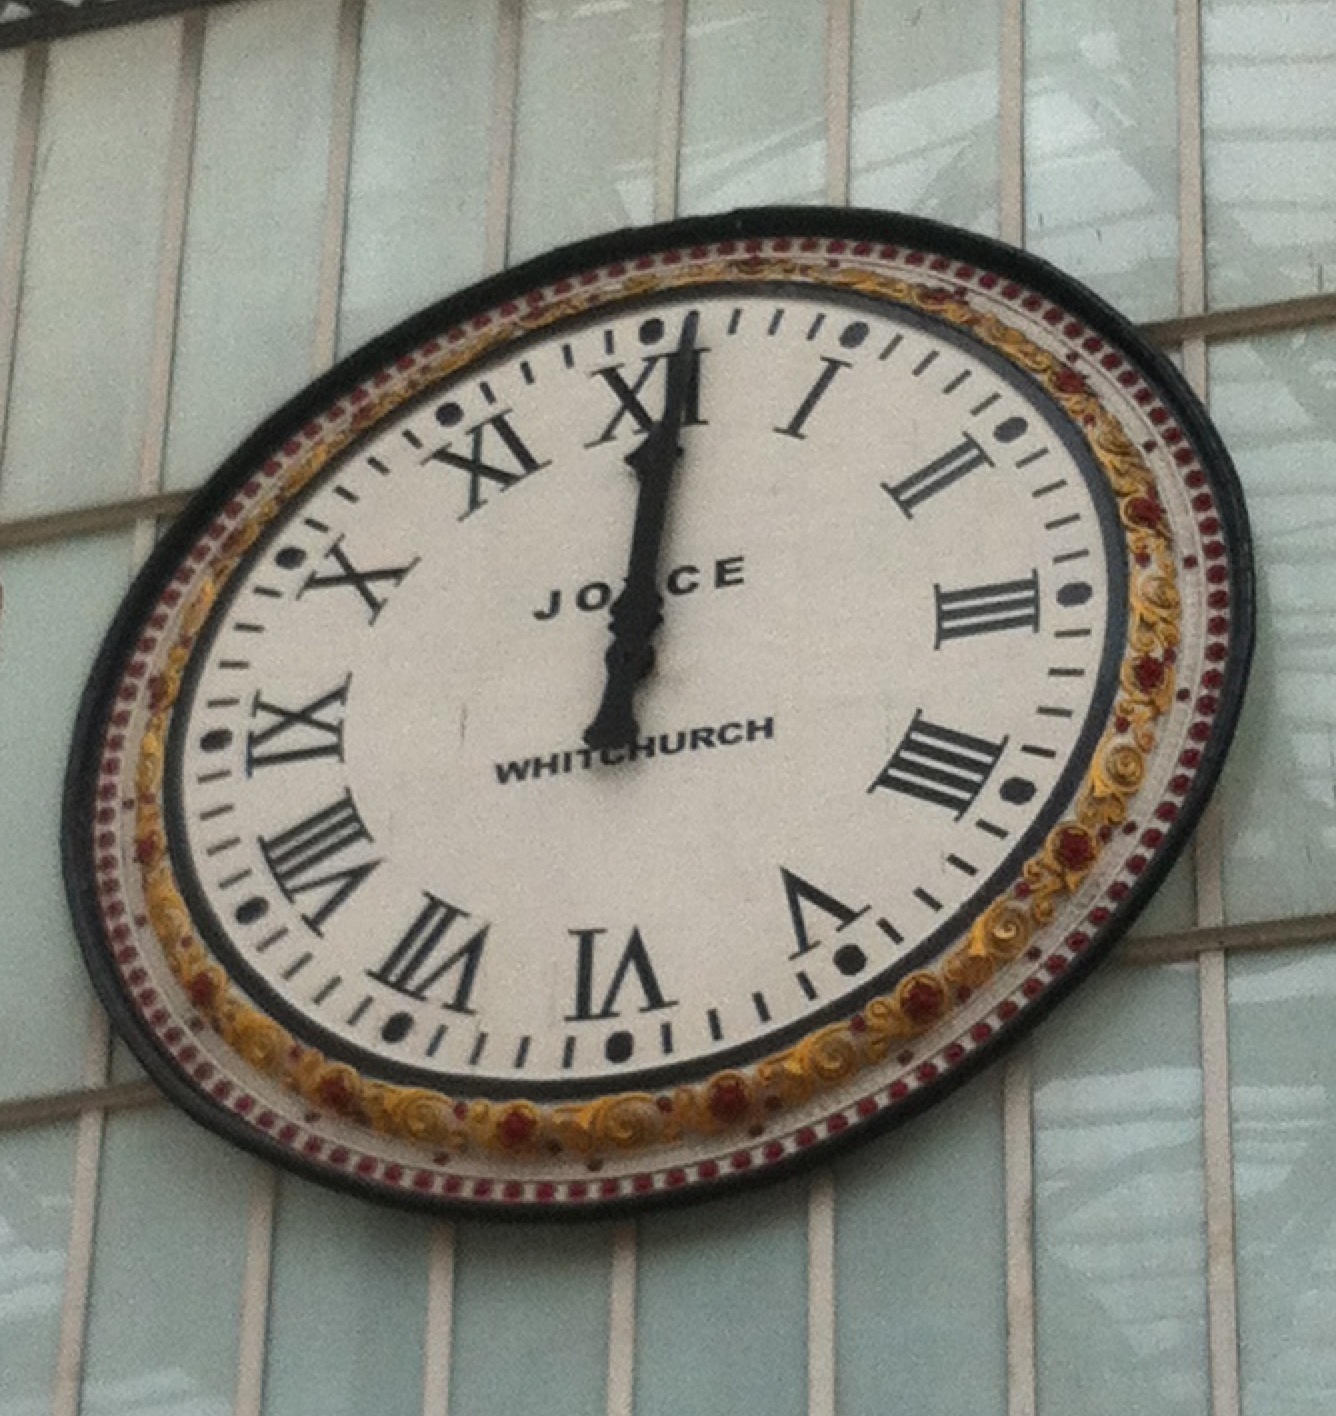 Lime Street Station Clock